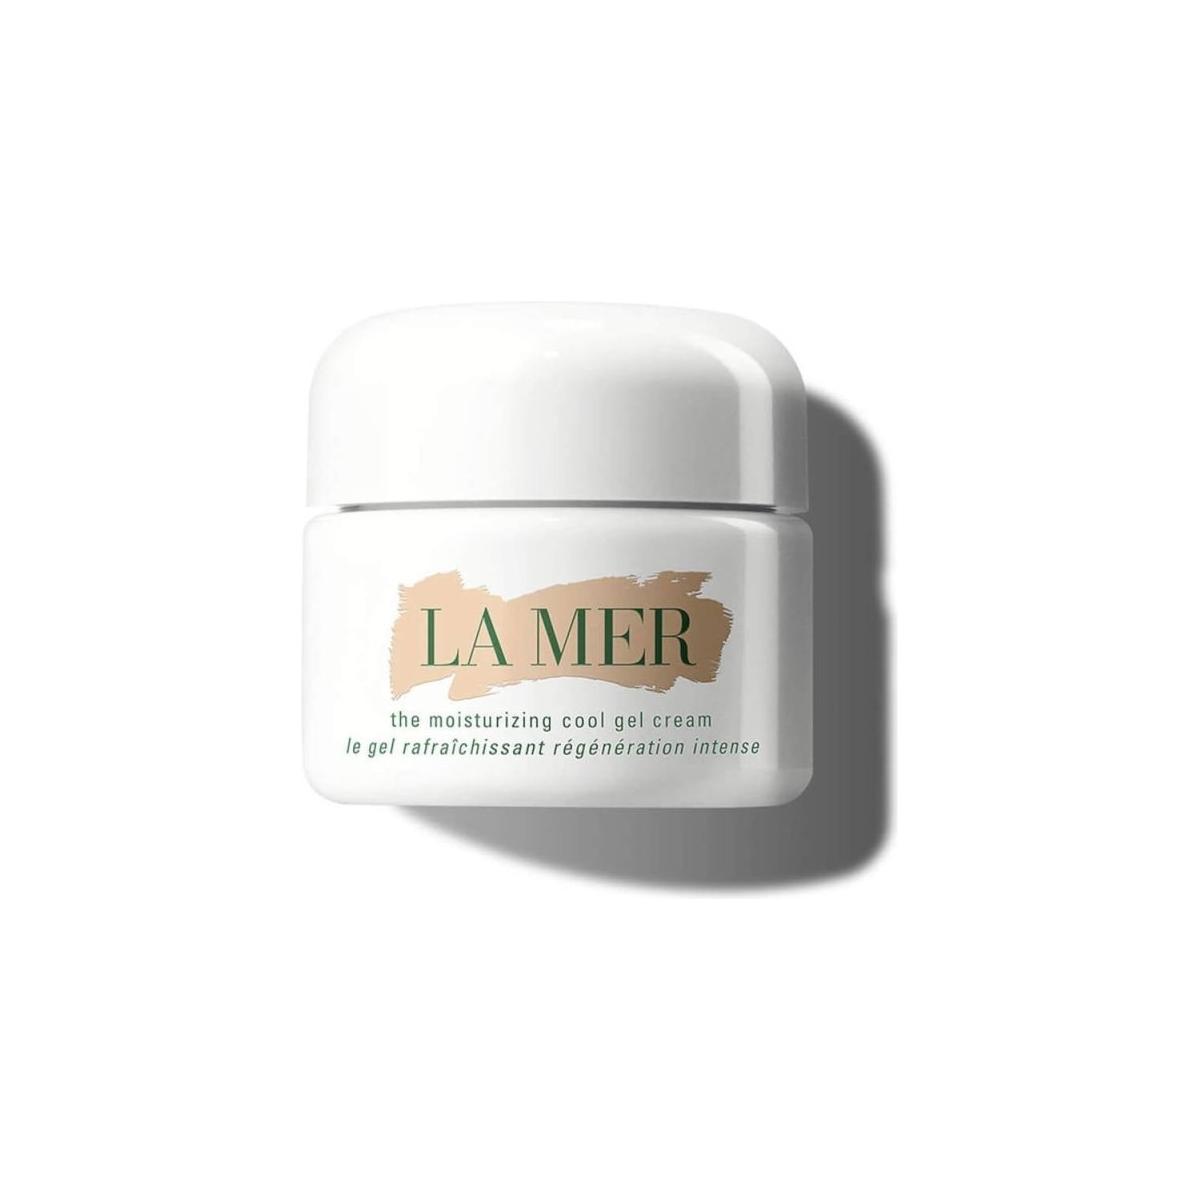 LA MER The Moisturizing Cool Gel Cream - 30ml - DG International Ventures Limited